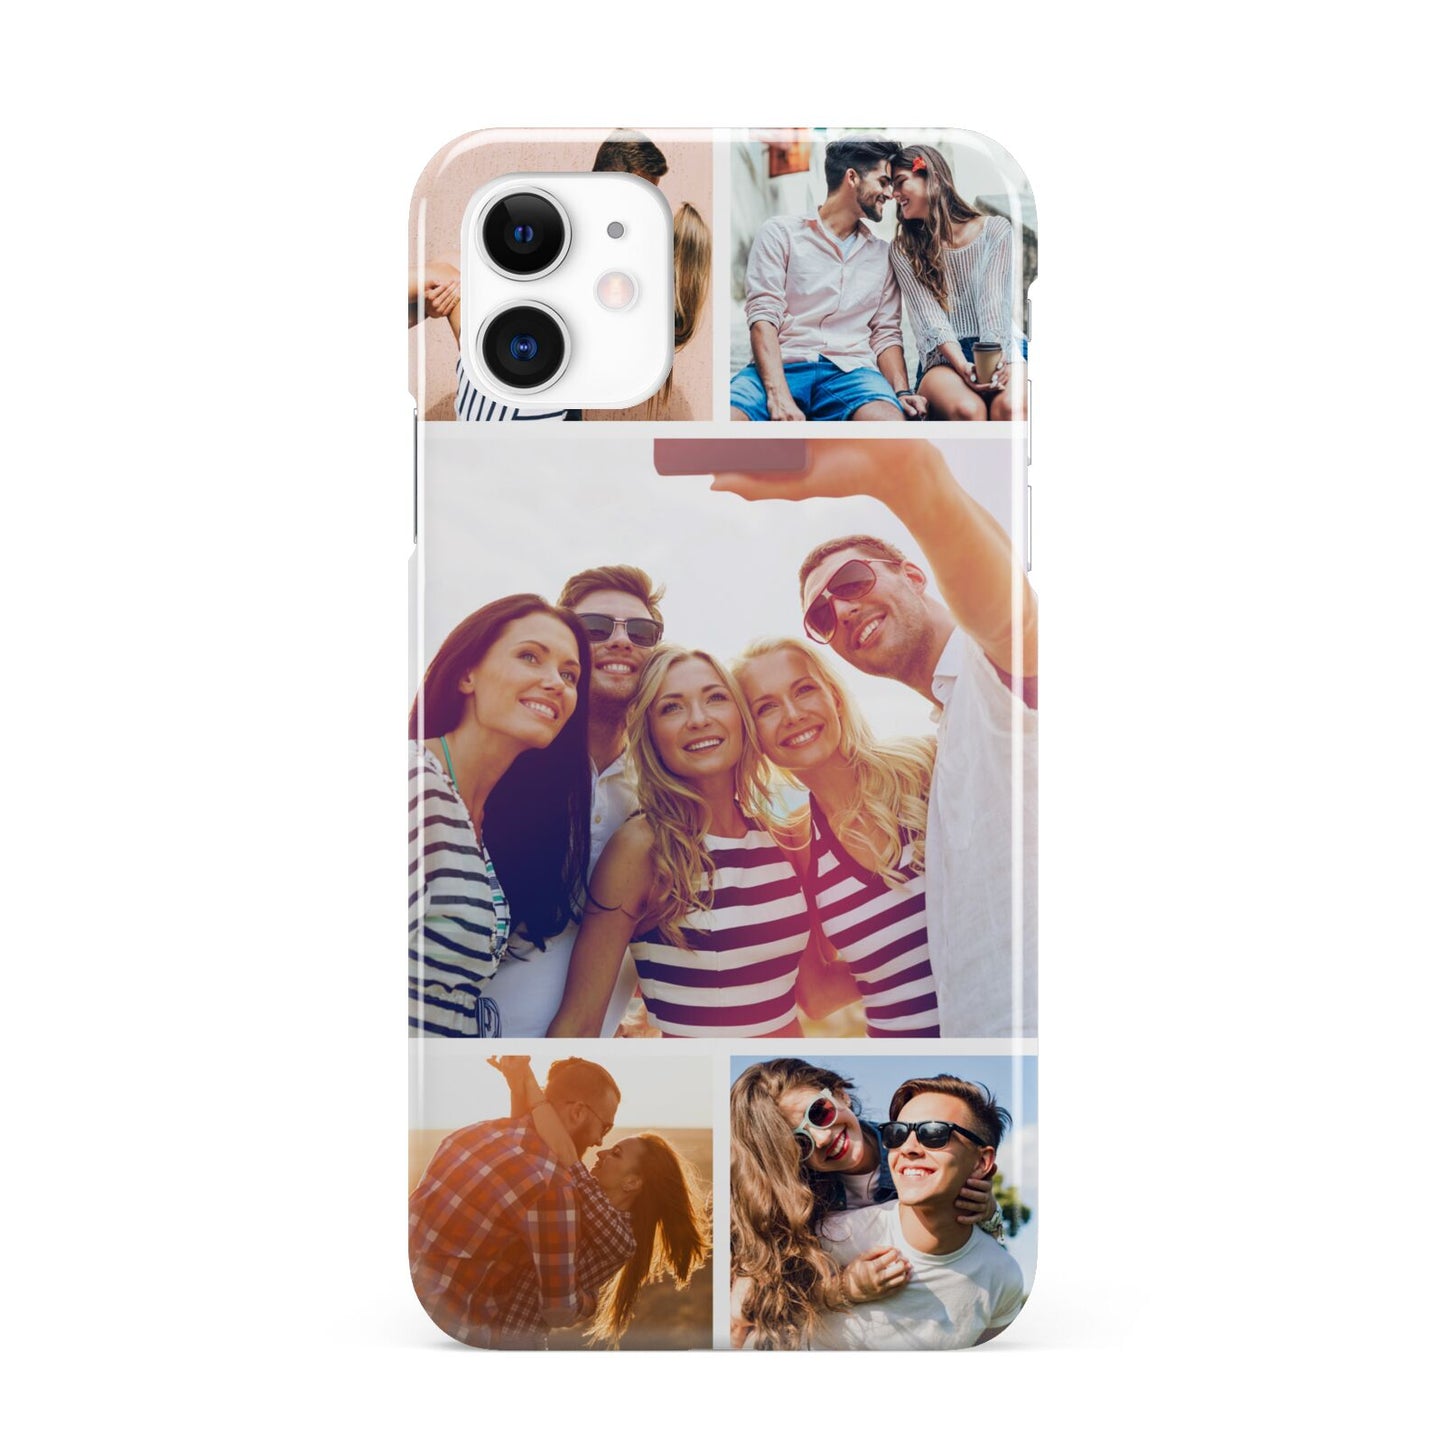 Tile Photo Collage Upload iPhone 11 3D Snap Case